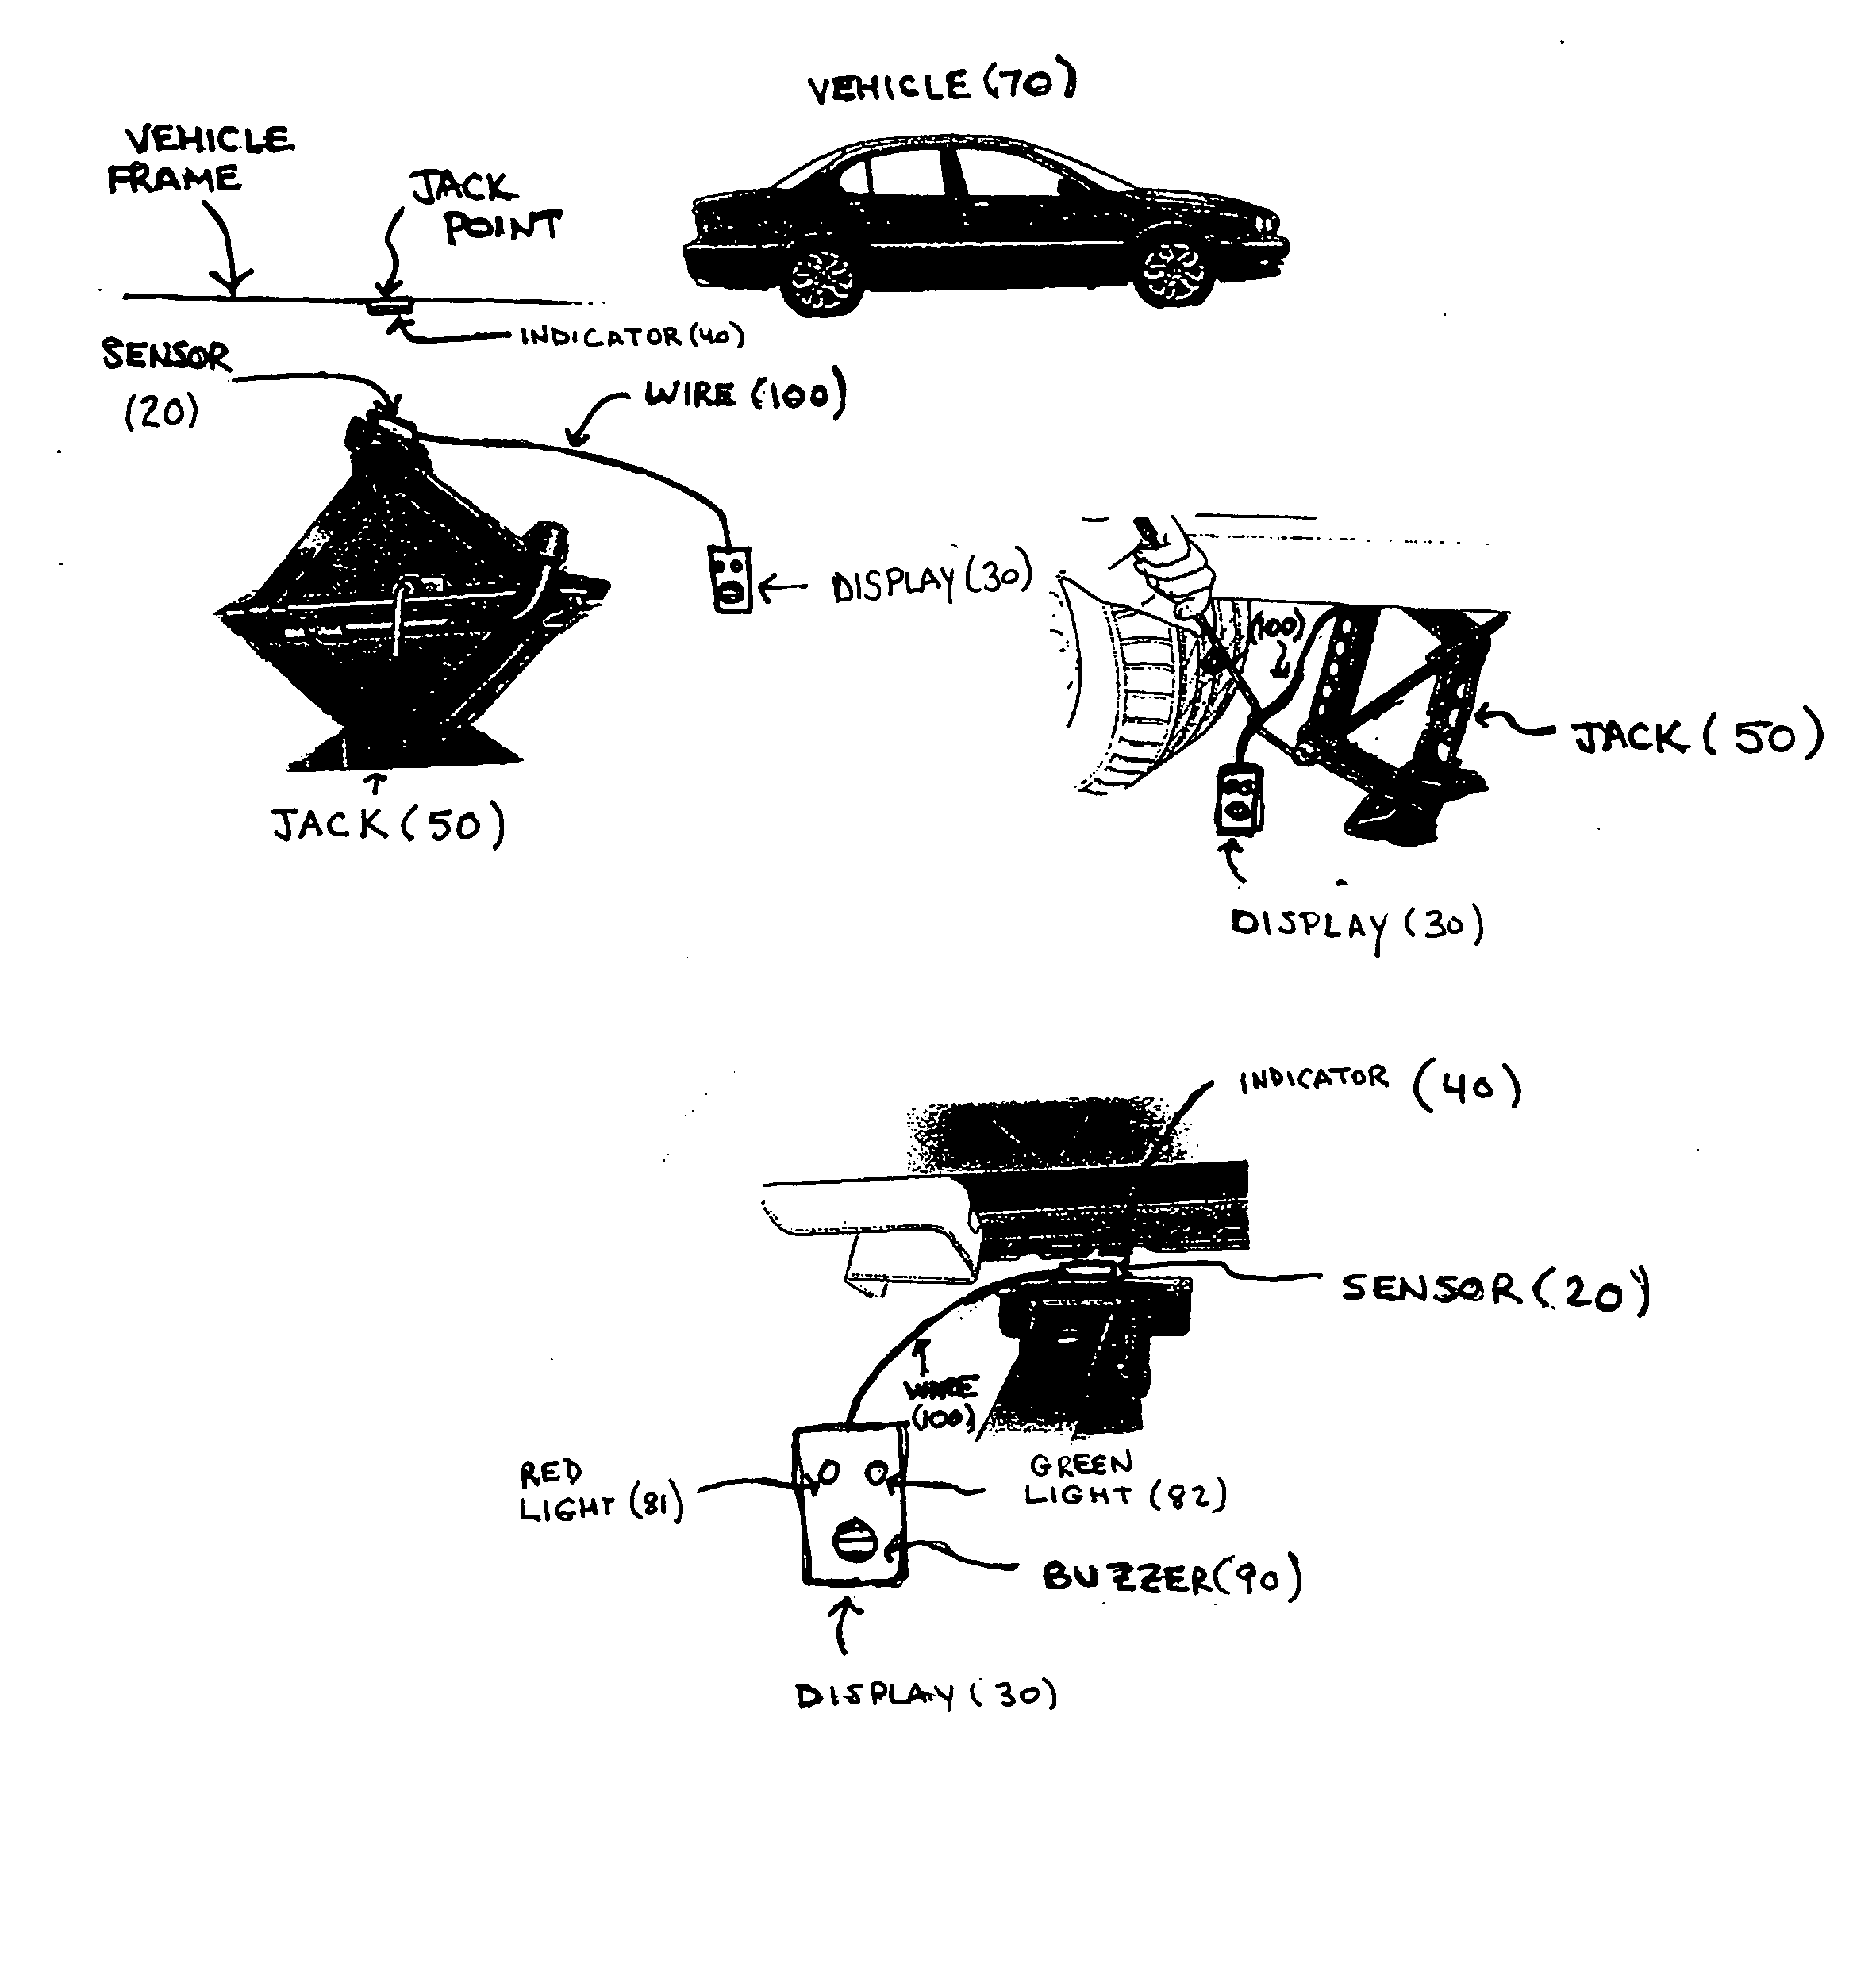 Vehicle jack positioning device and method